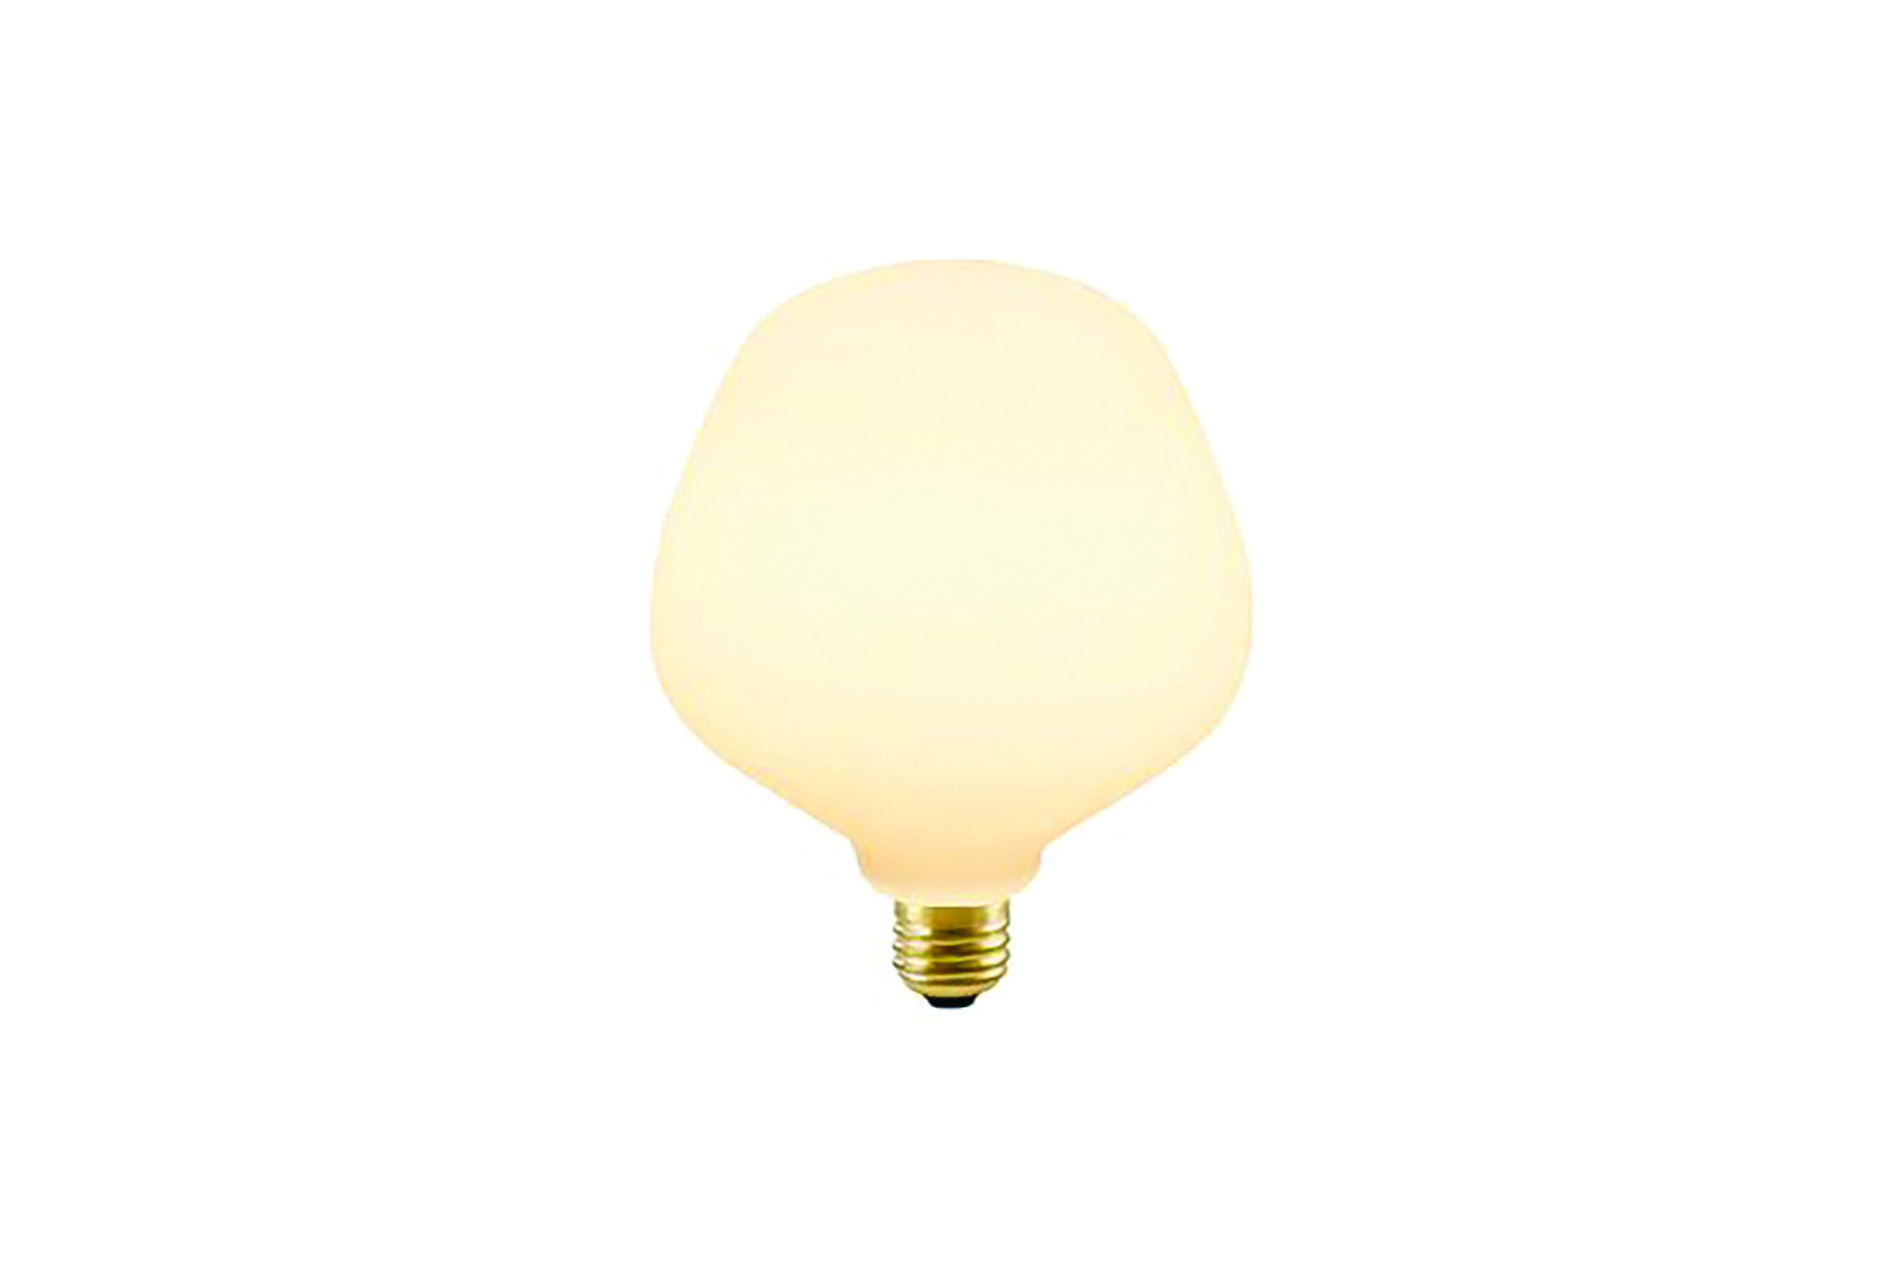 Trapezoidal, yellow lightbulb. Image by Barn Light Electric.